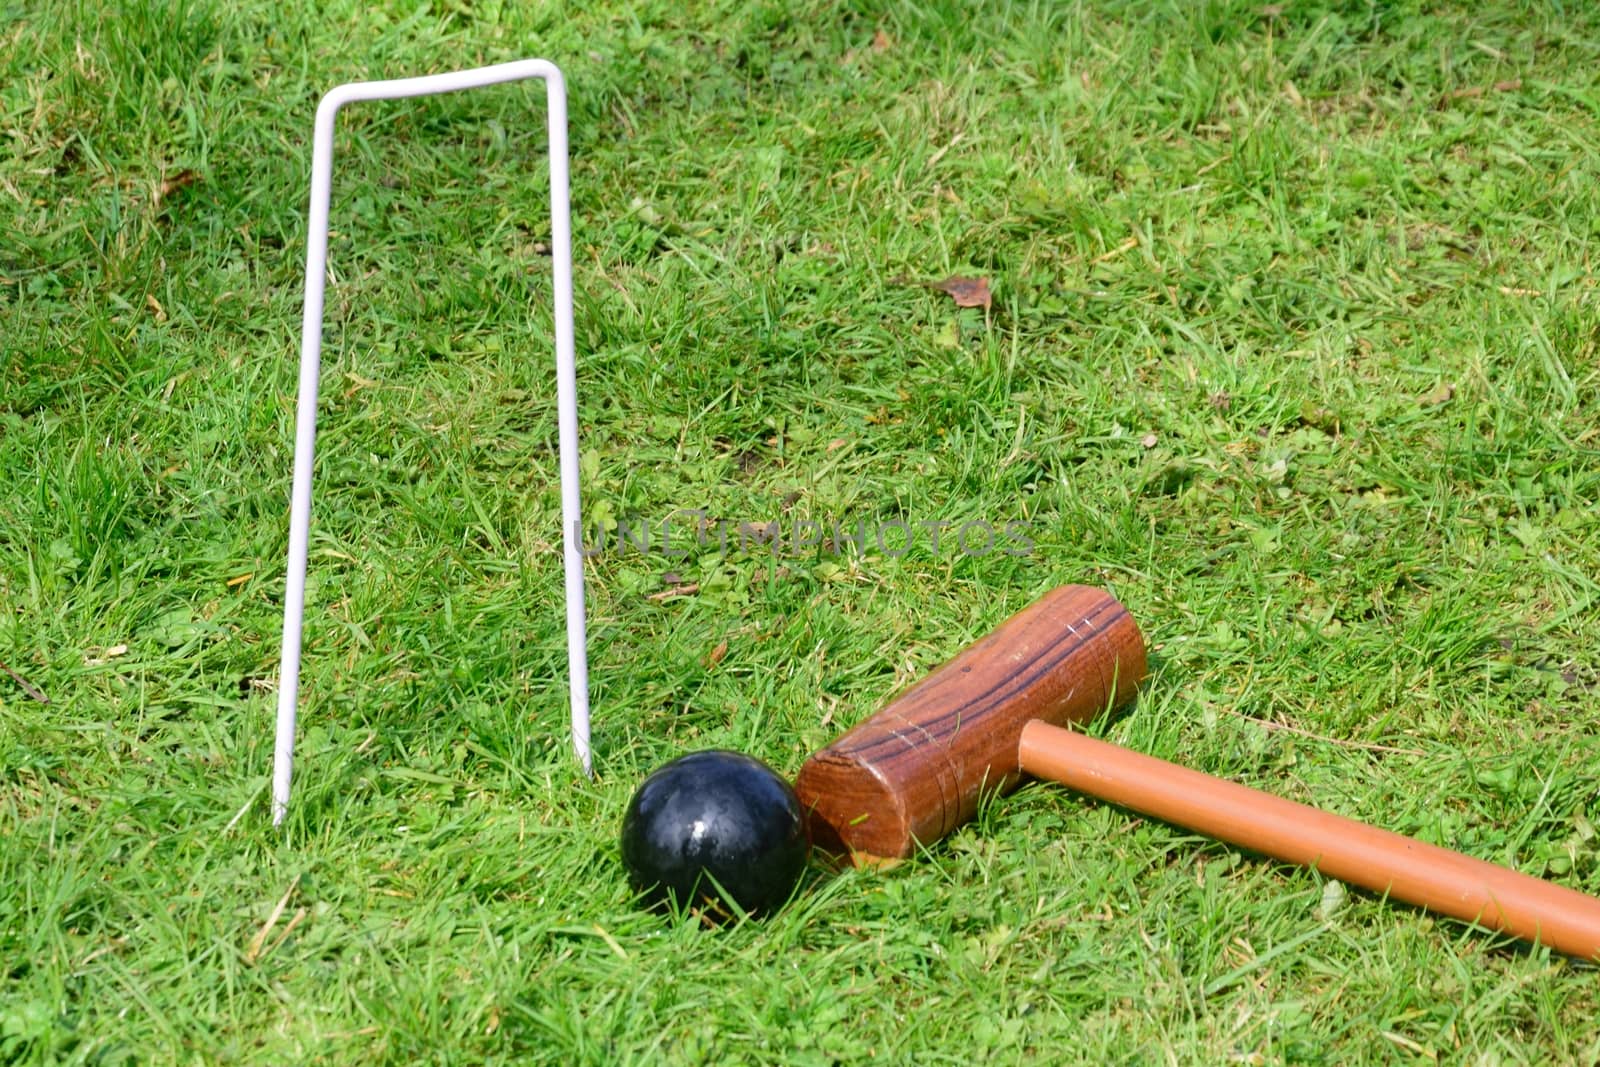 Croquet equipment by pauws99